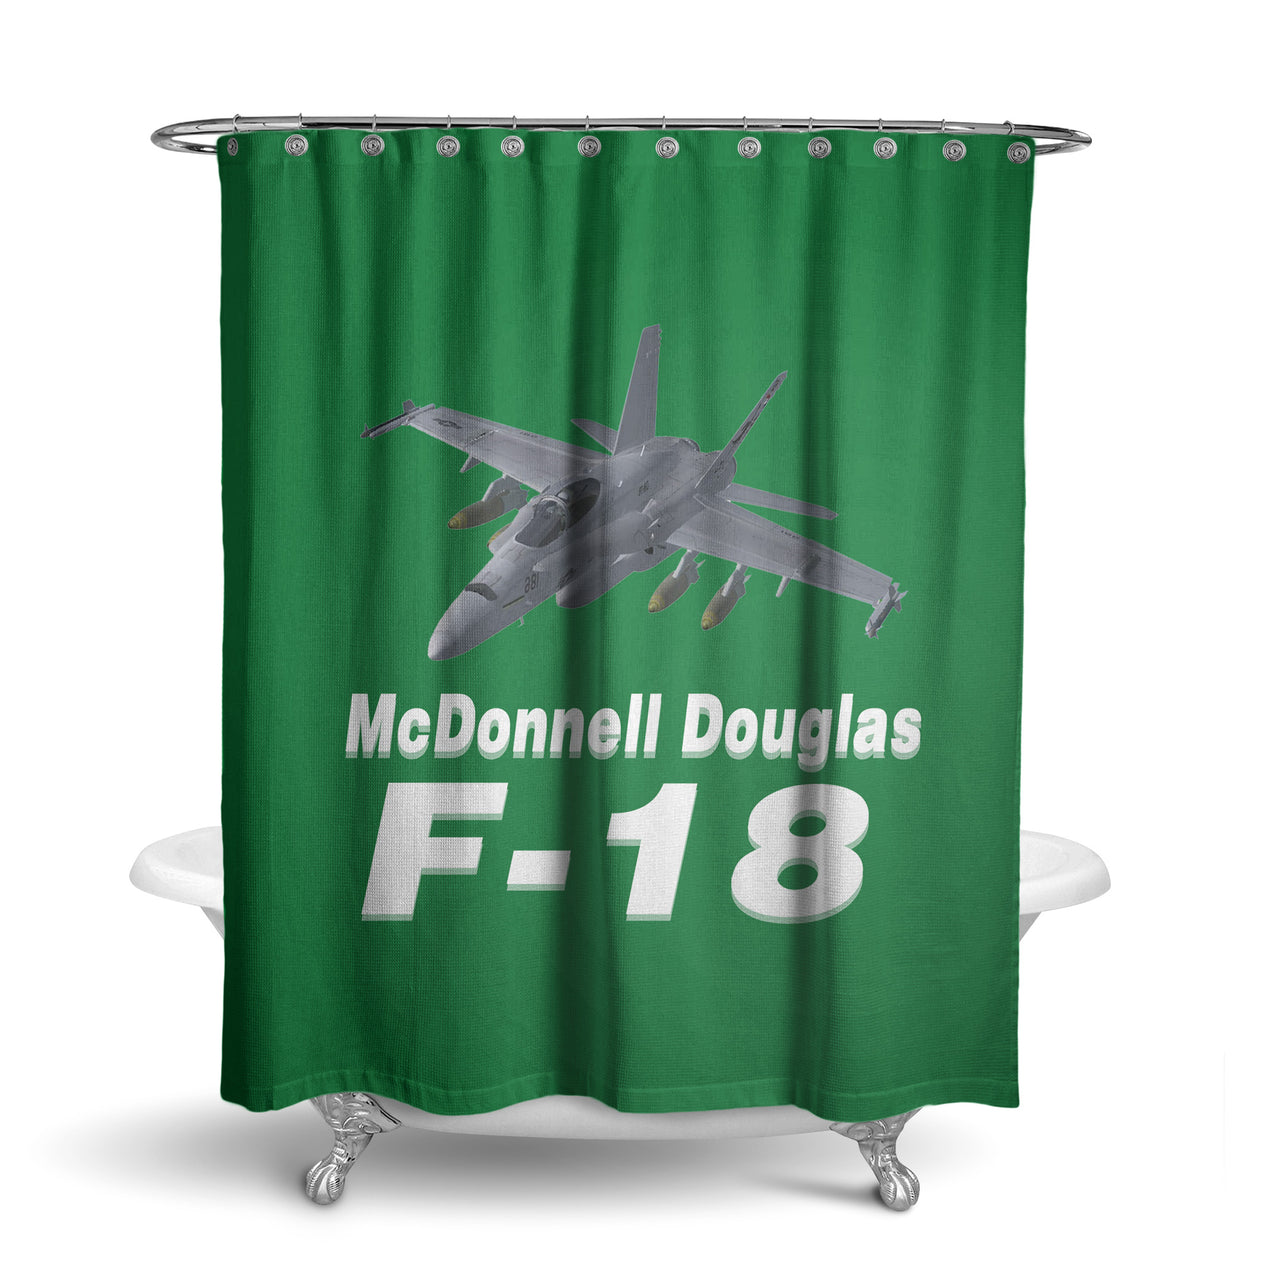 The McDonnell Douglas F18 Designed Shower Curtains